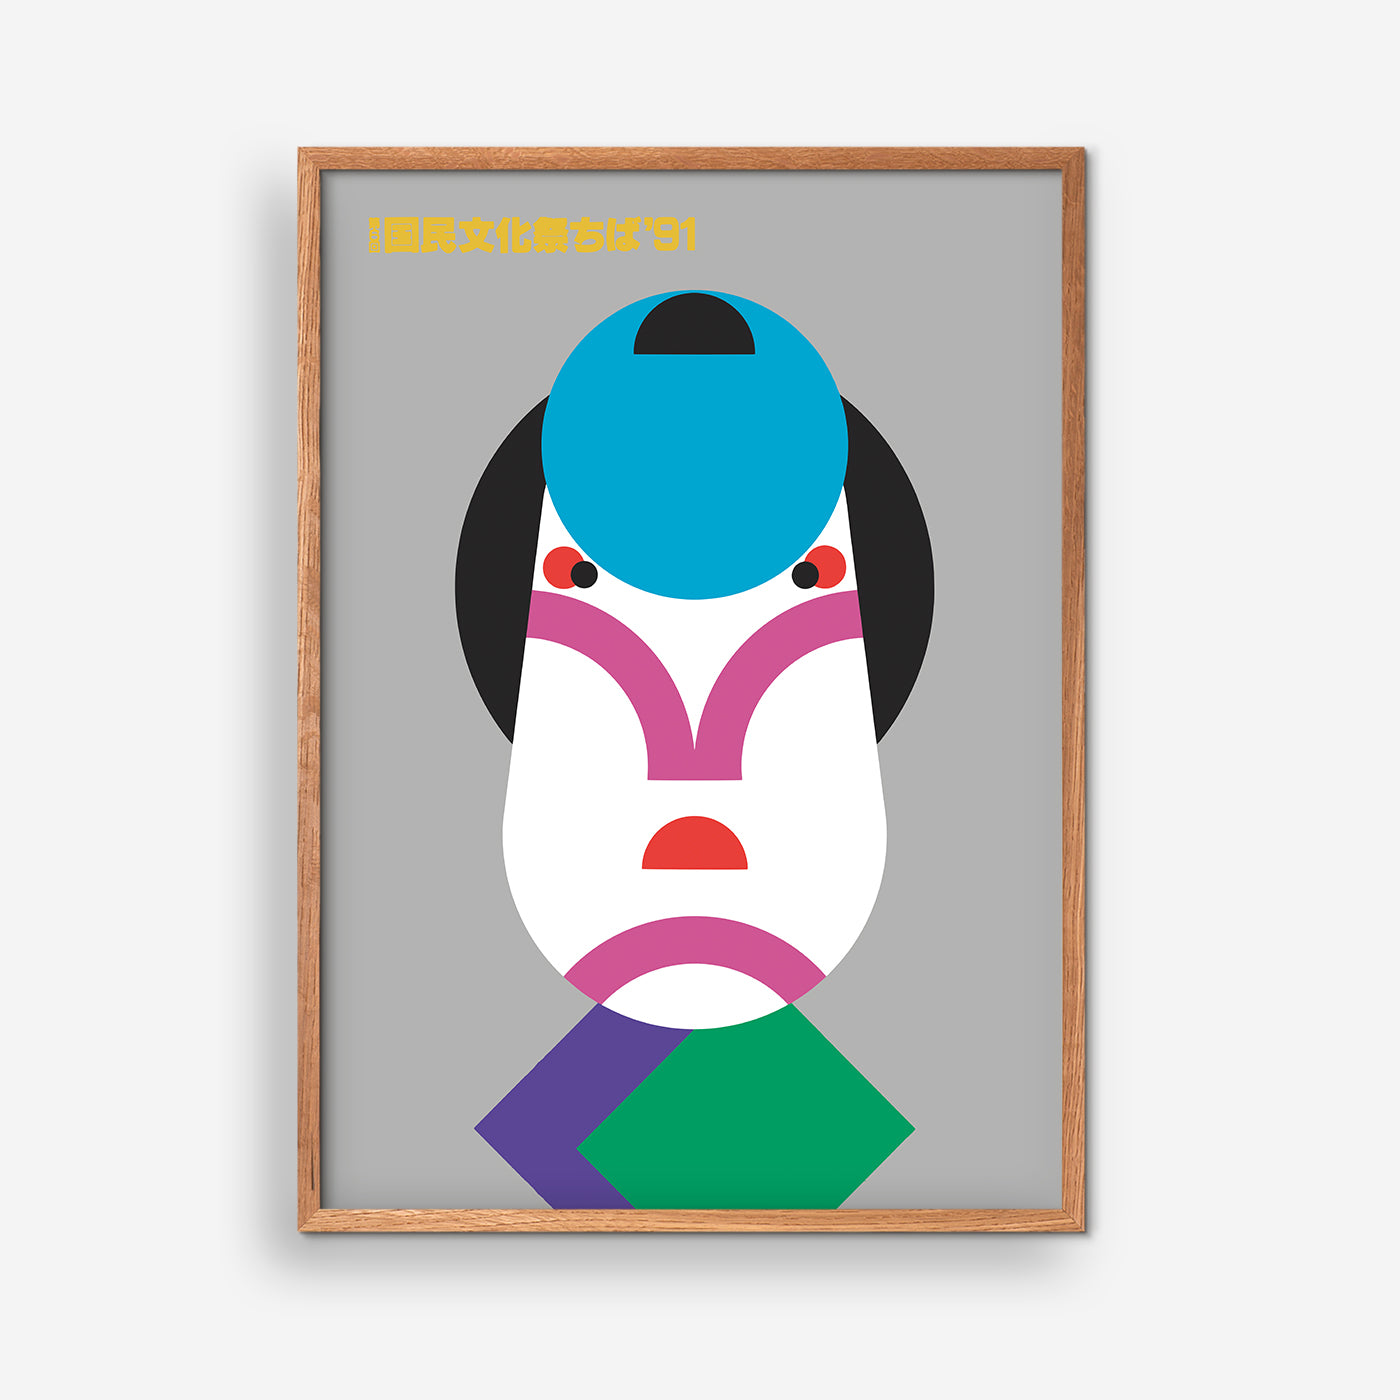 Gesicht II – Ikko Tanaka